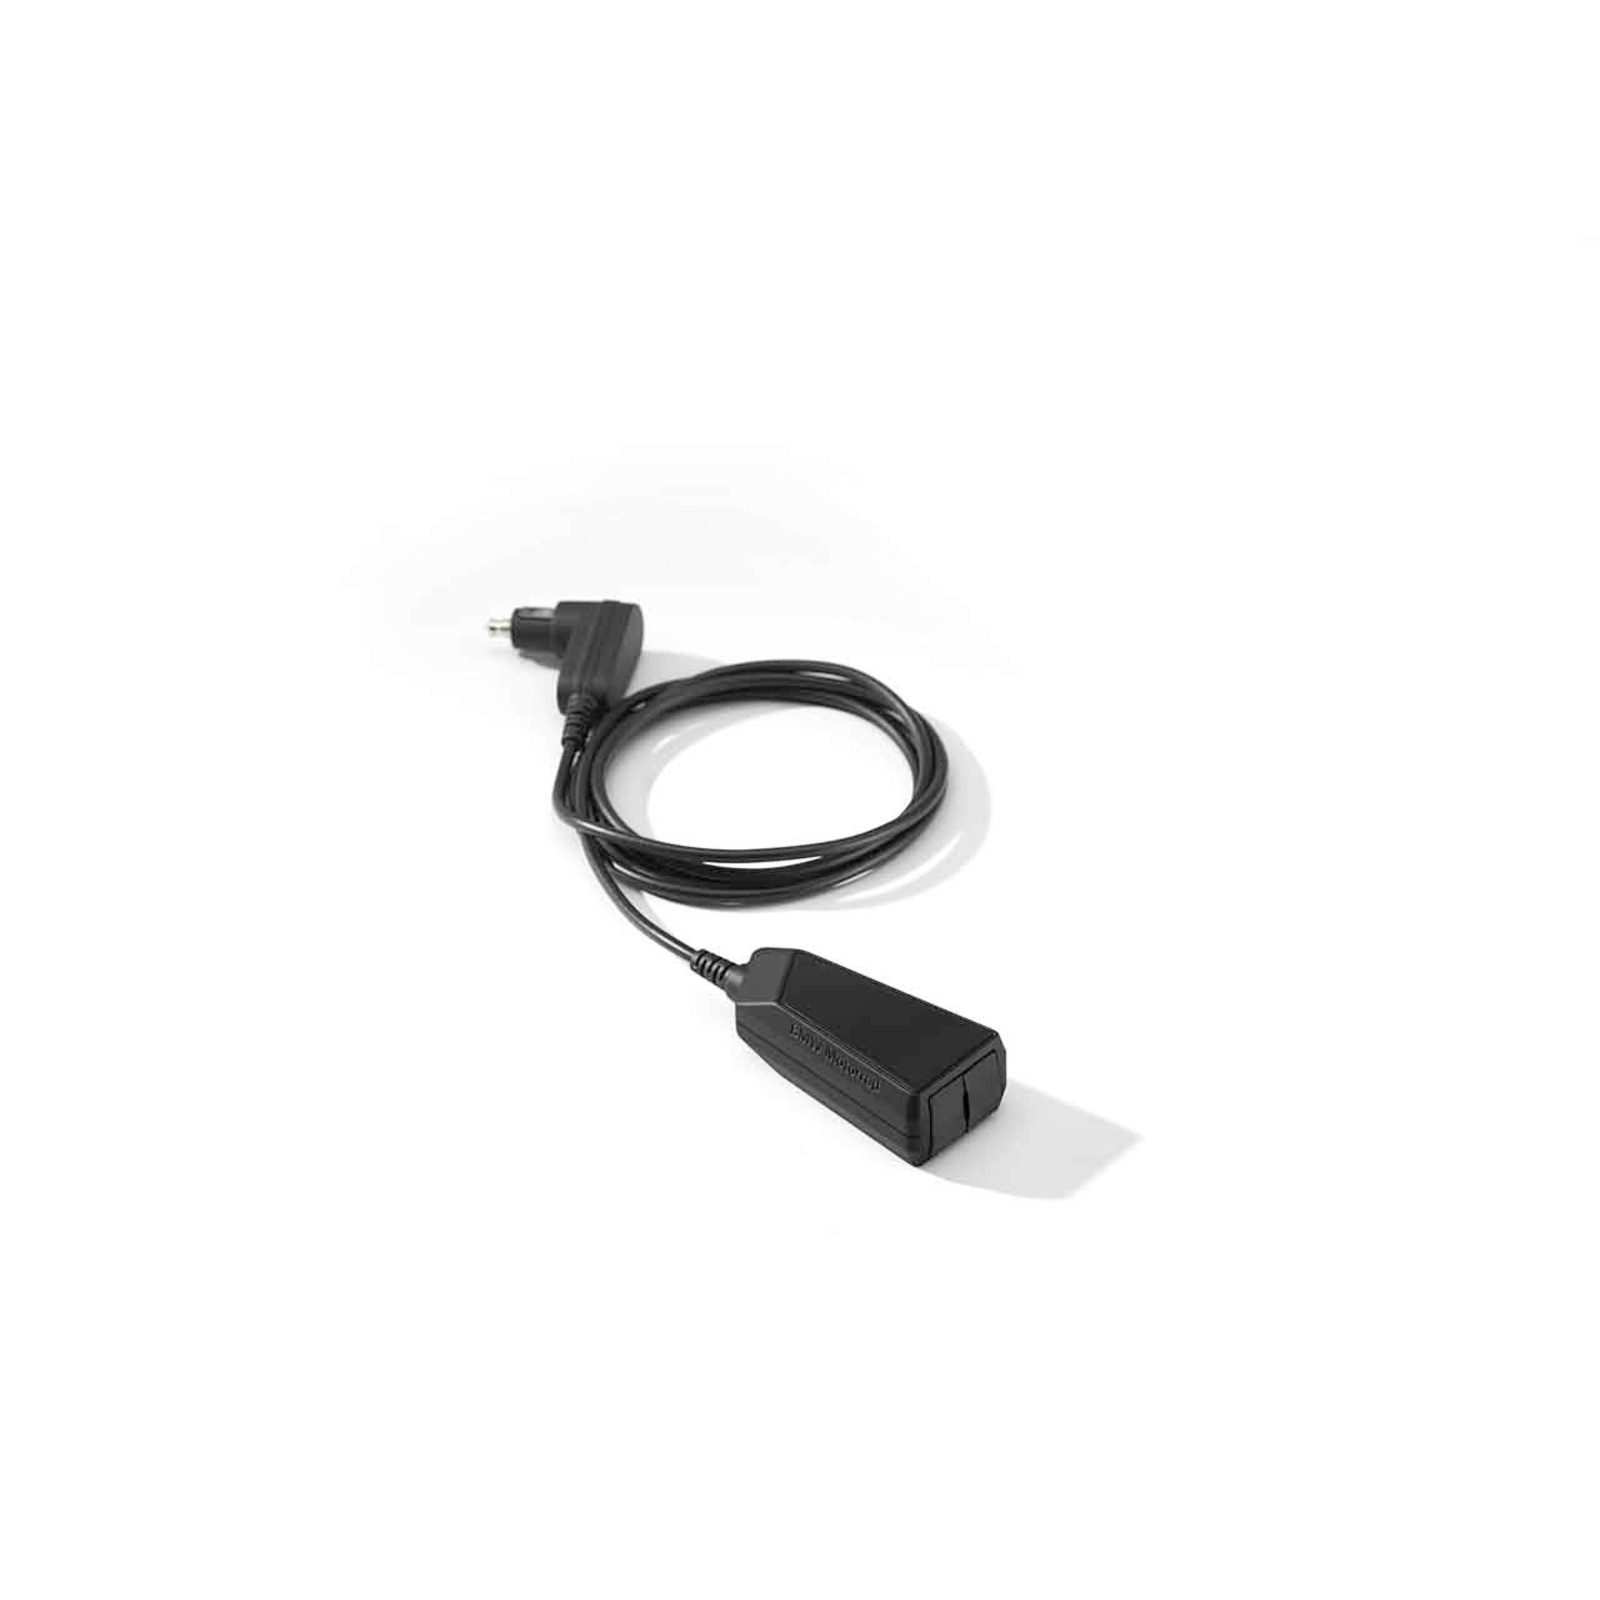 USB-Steckdose für BMW C 600 Sport um 25,00 EUR - 1000PS Shop - Anbau-Teile